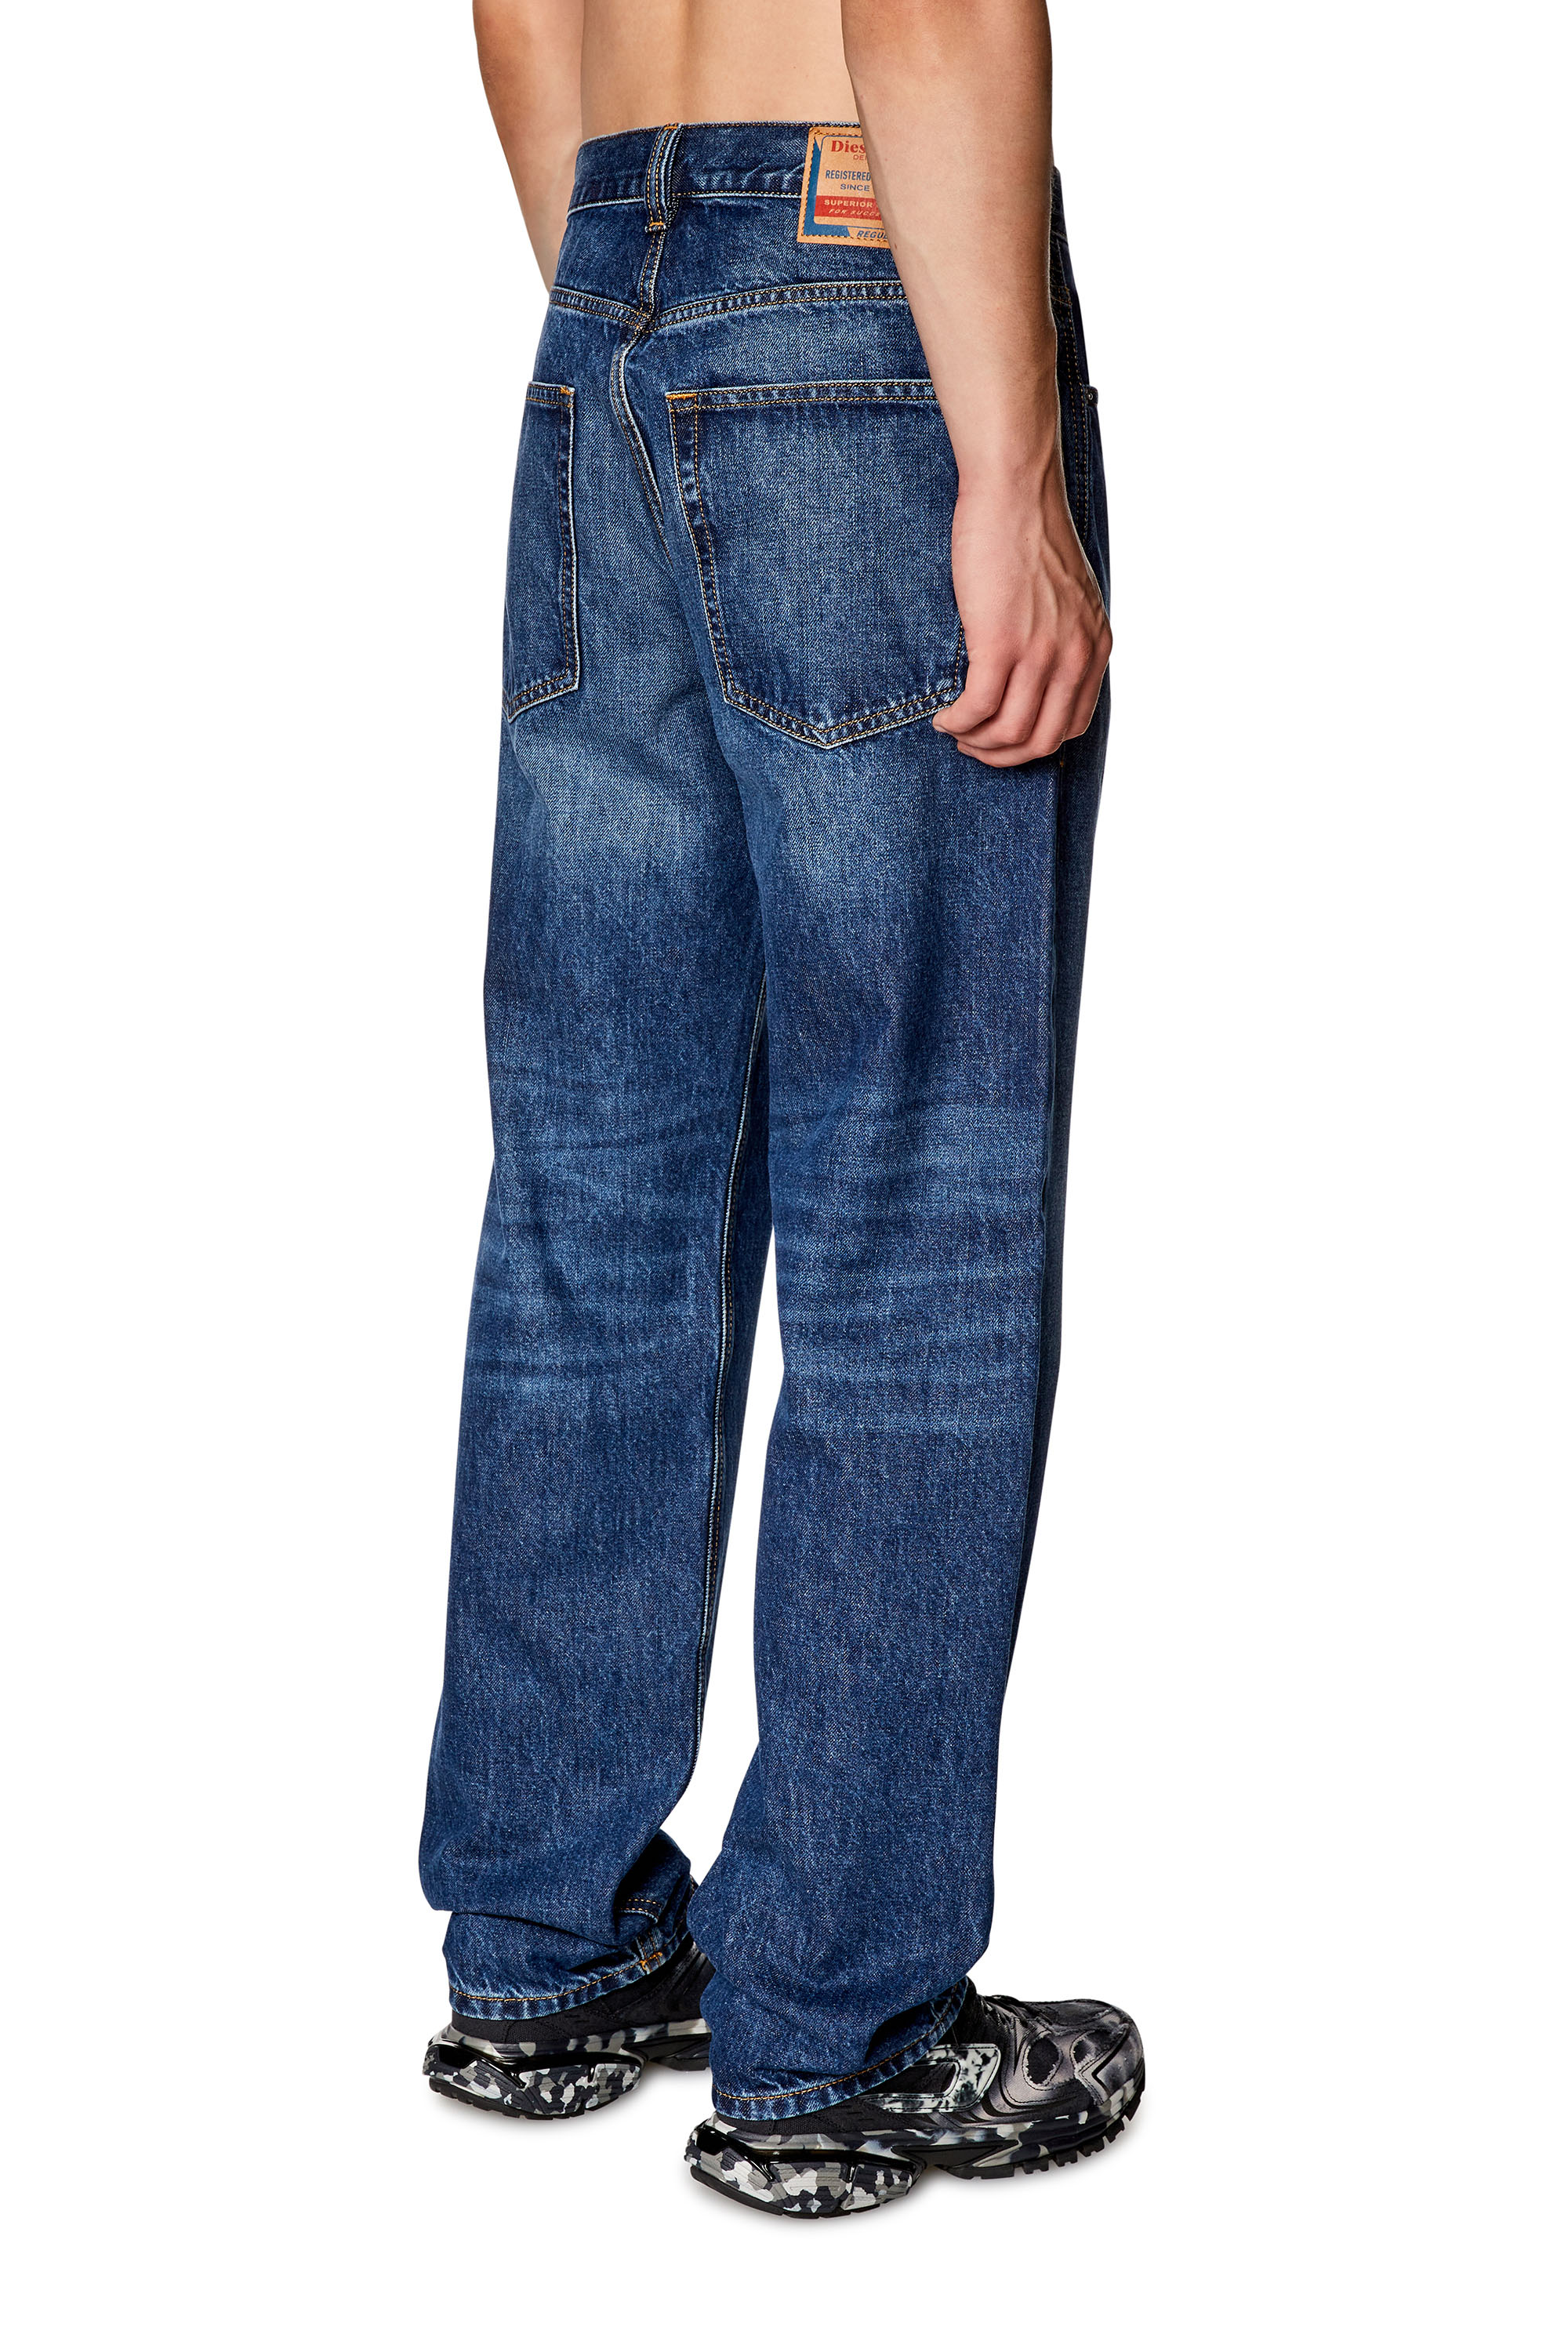 Size 8 In Jeansplus Size Men's Baggy Jeans - Loose Fit Straight Leg Denim  Trousers 10xl